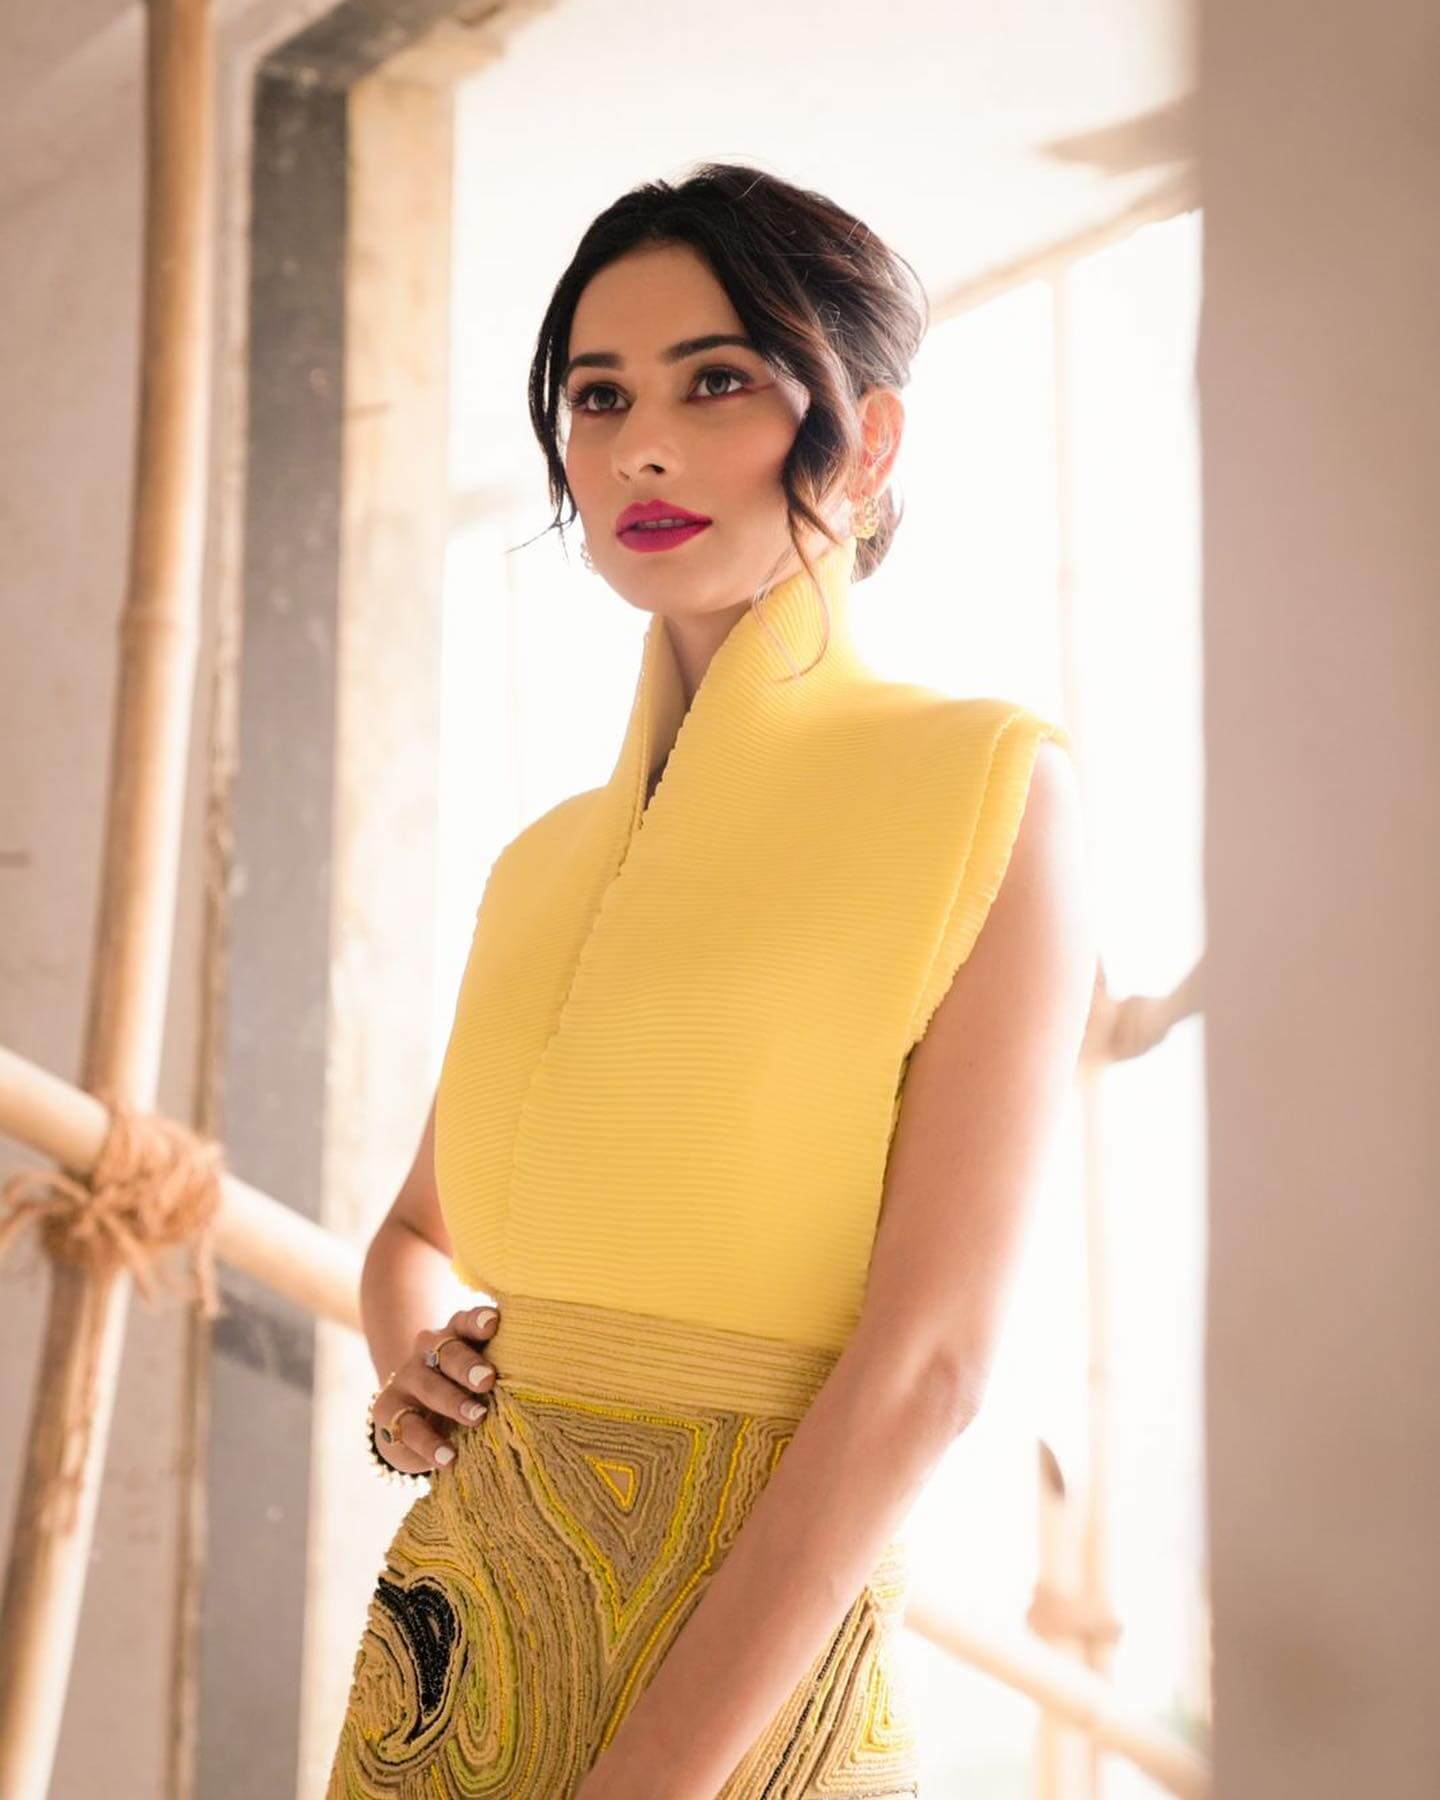 Actress Aneri Vajani in yellow top